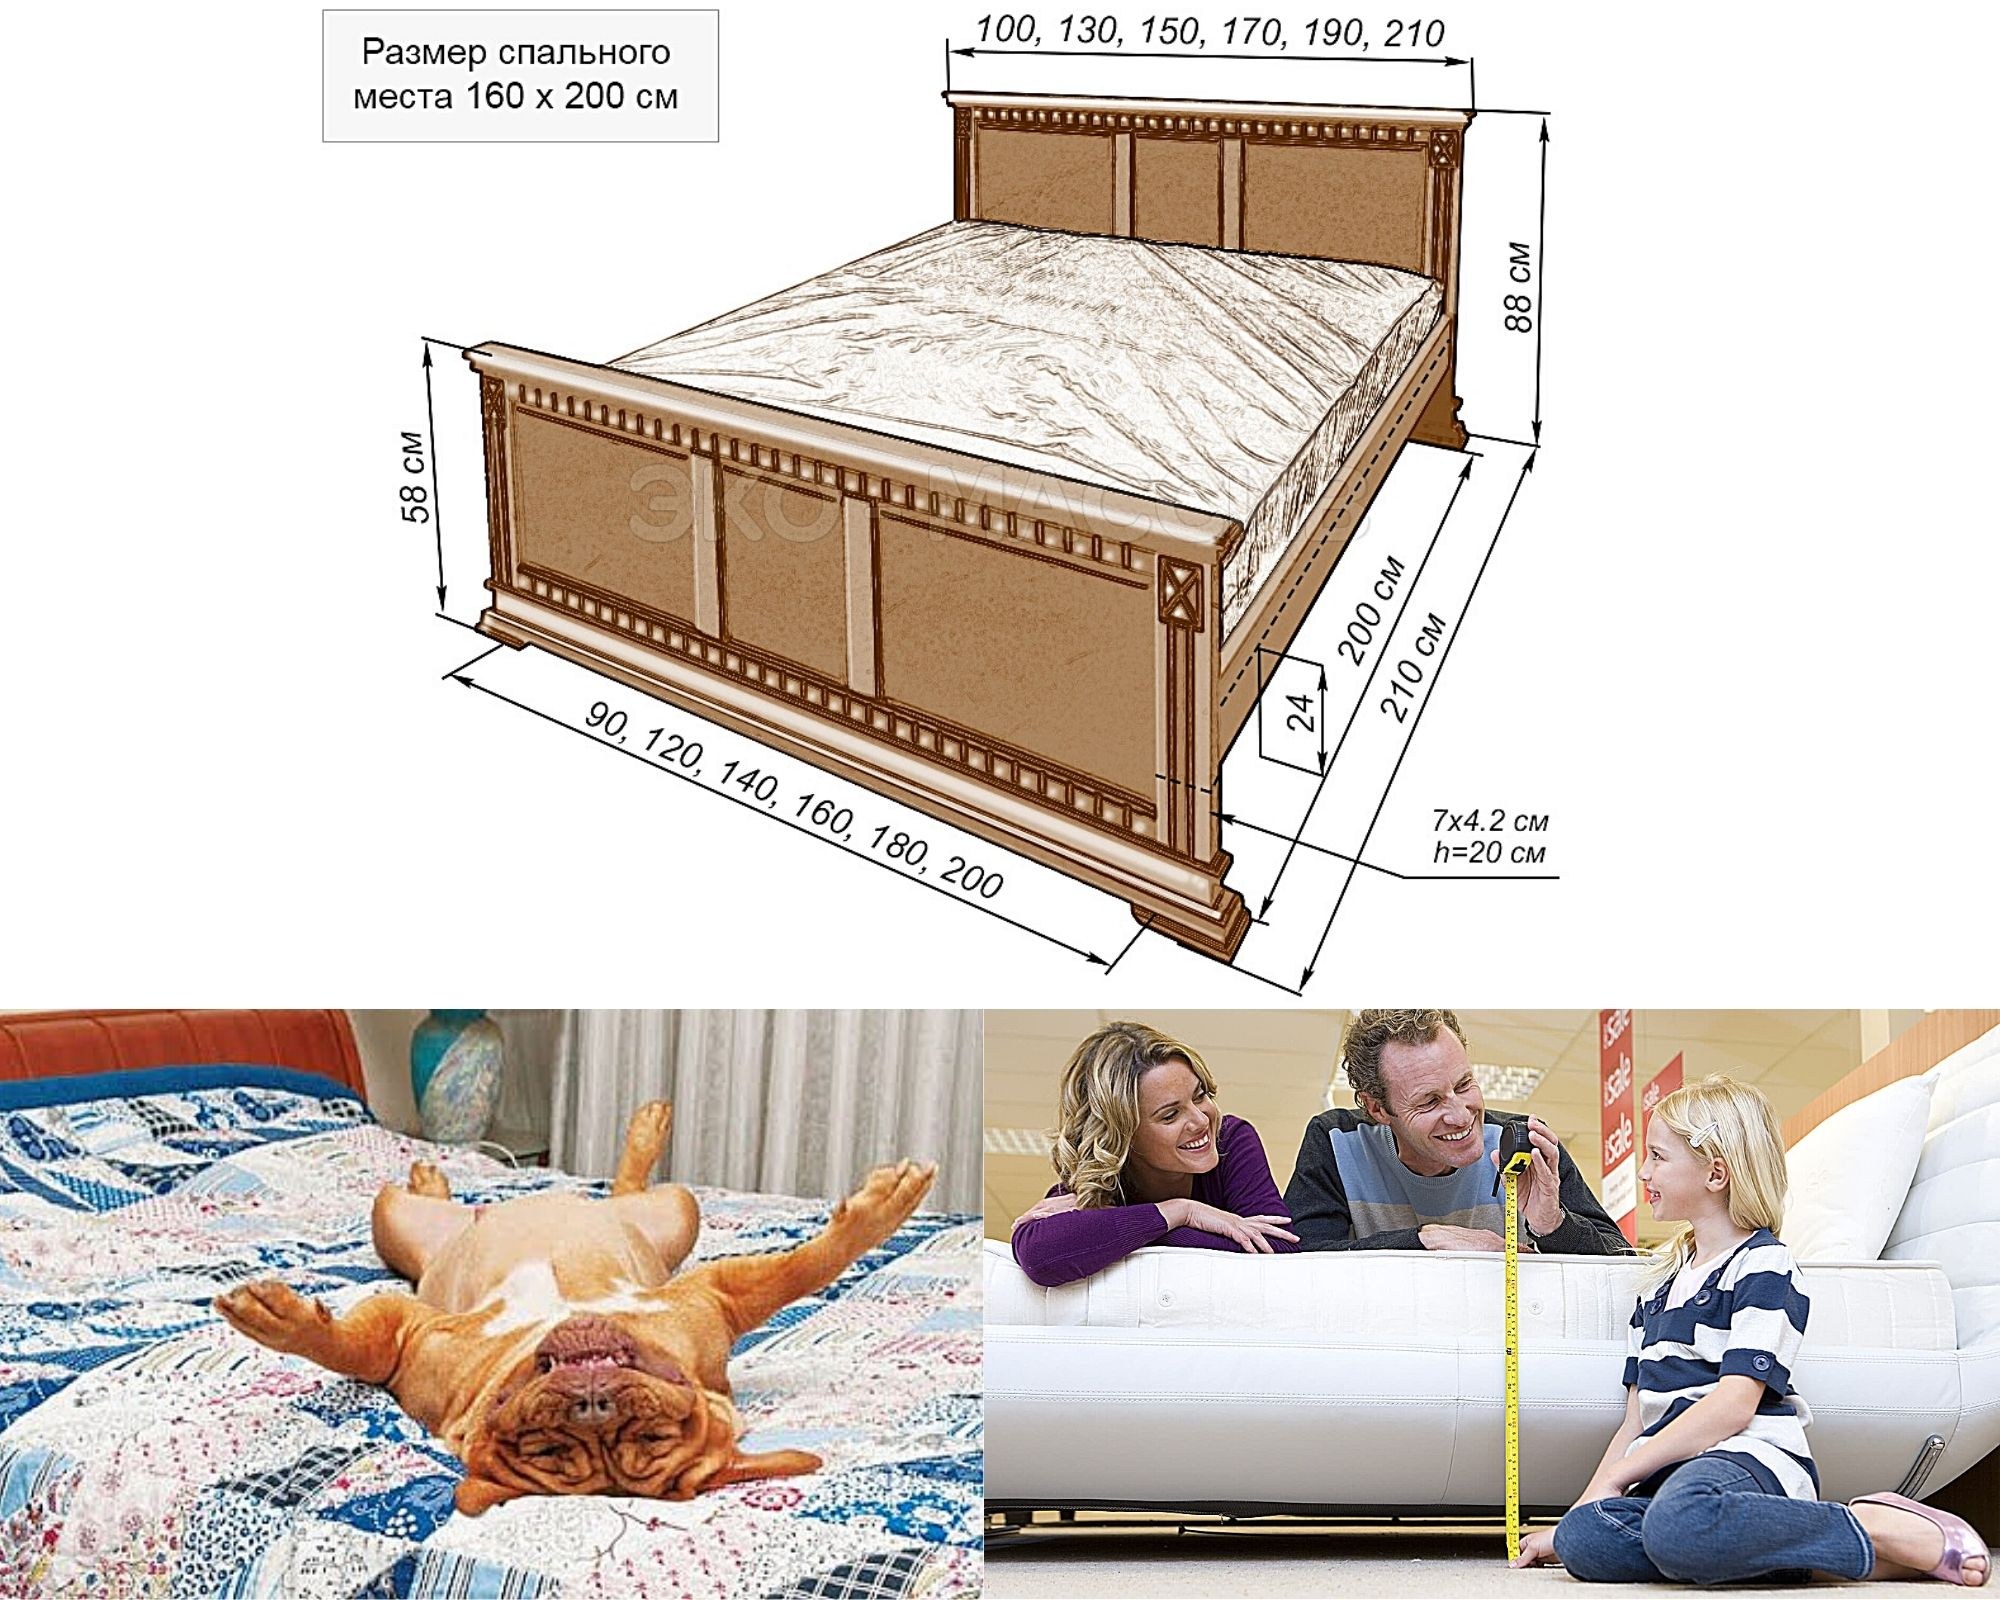 Размер двухспалки кровати стандарт